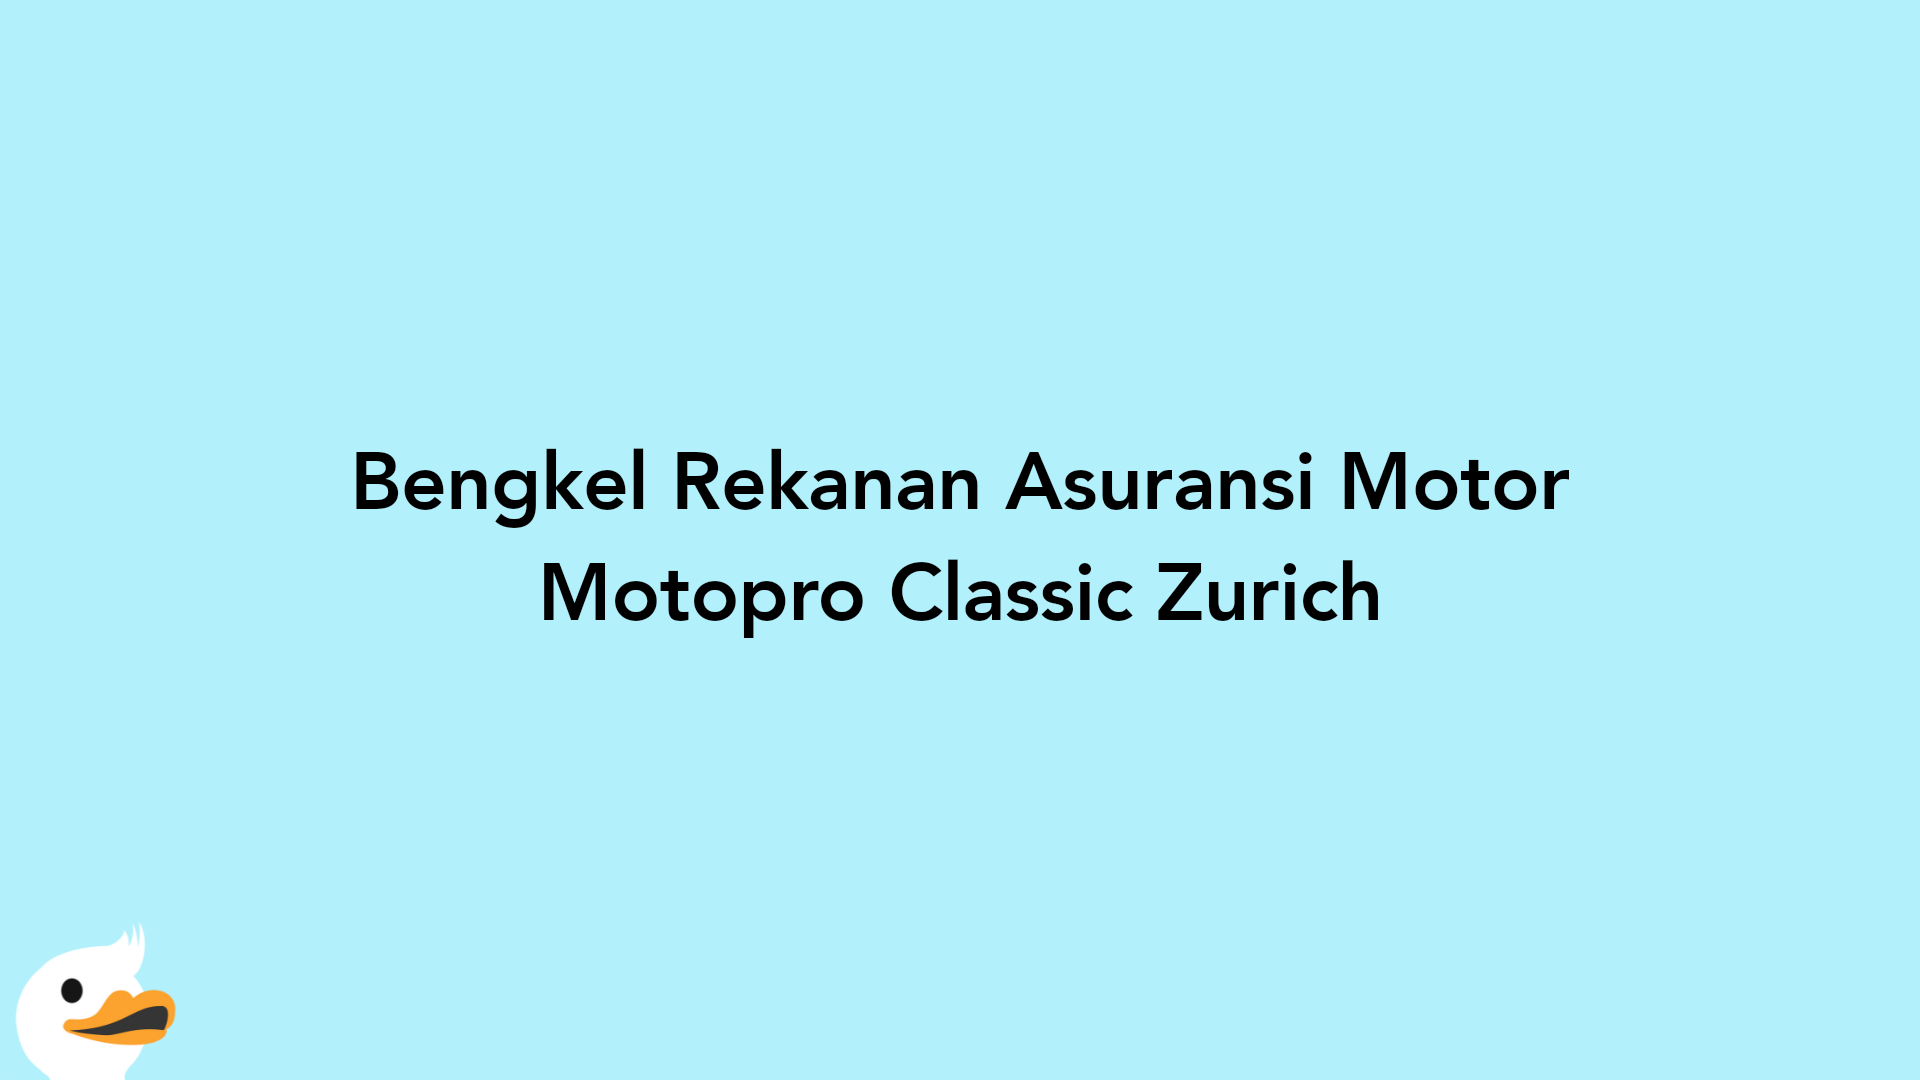 Bengkel Rekanan Asuransi Motor Motopro Classic Zurich